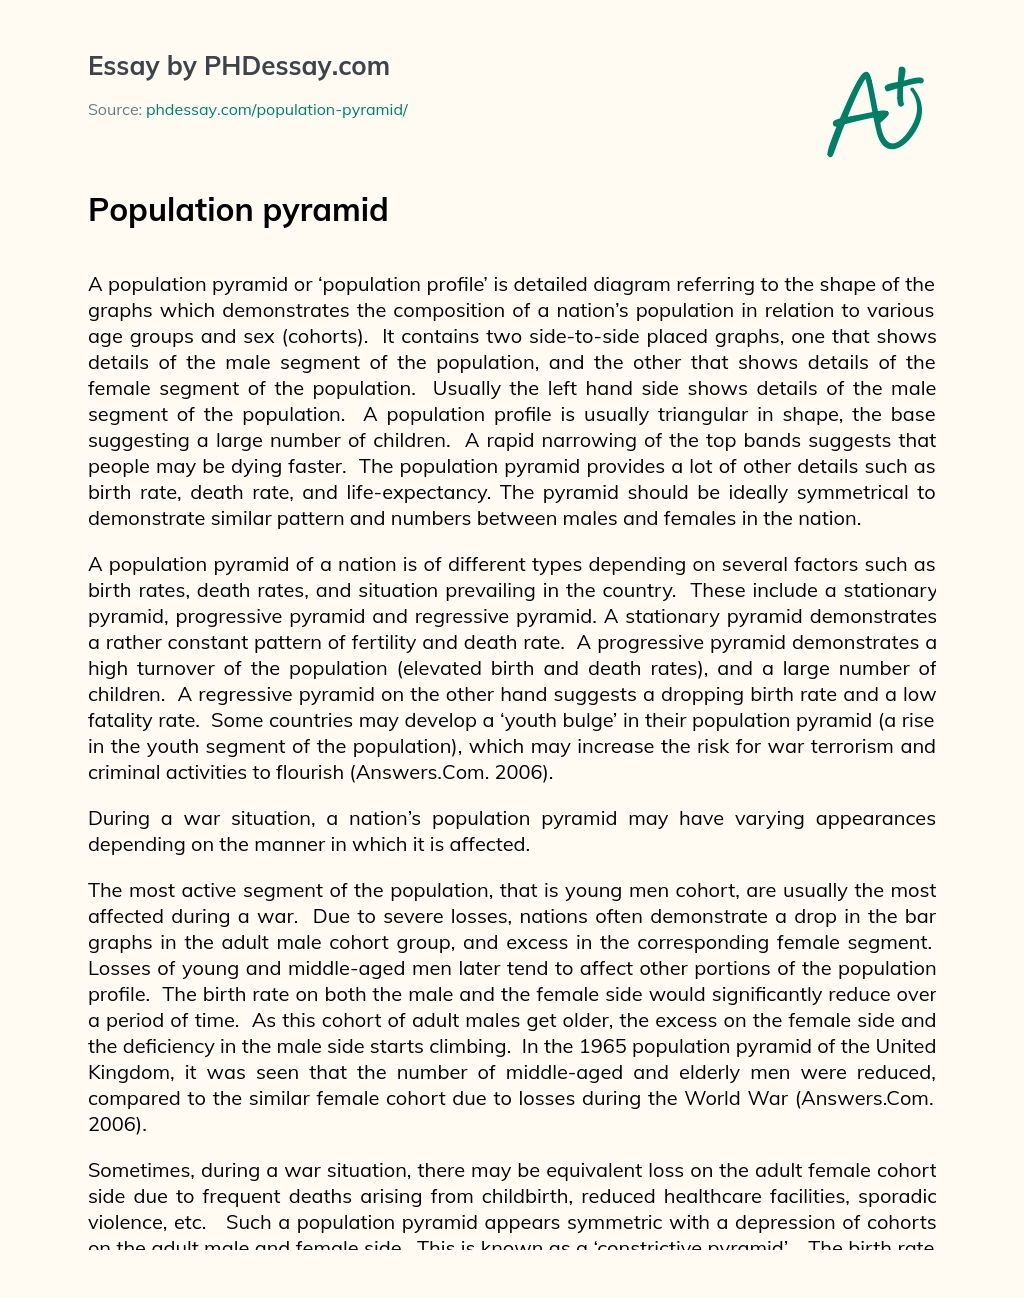 Population Pyramid essay